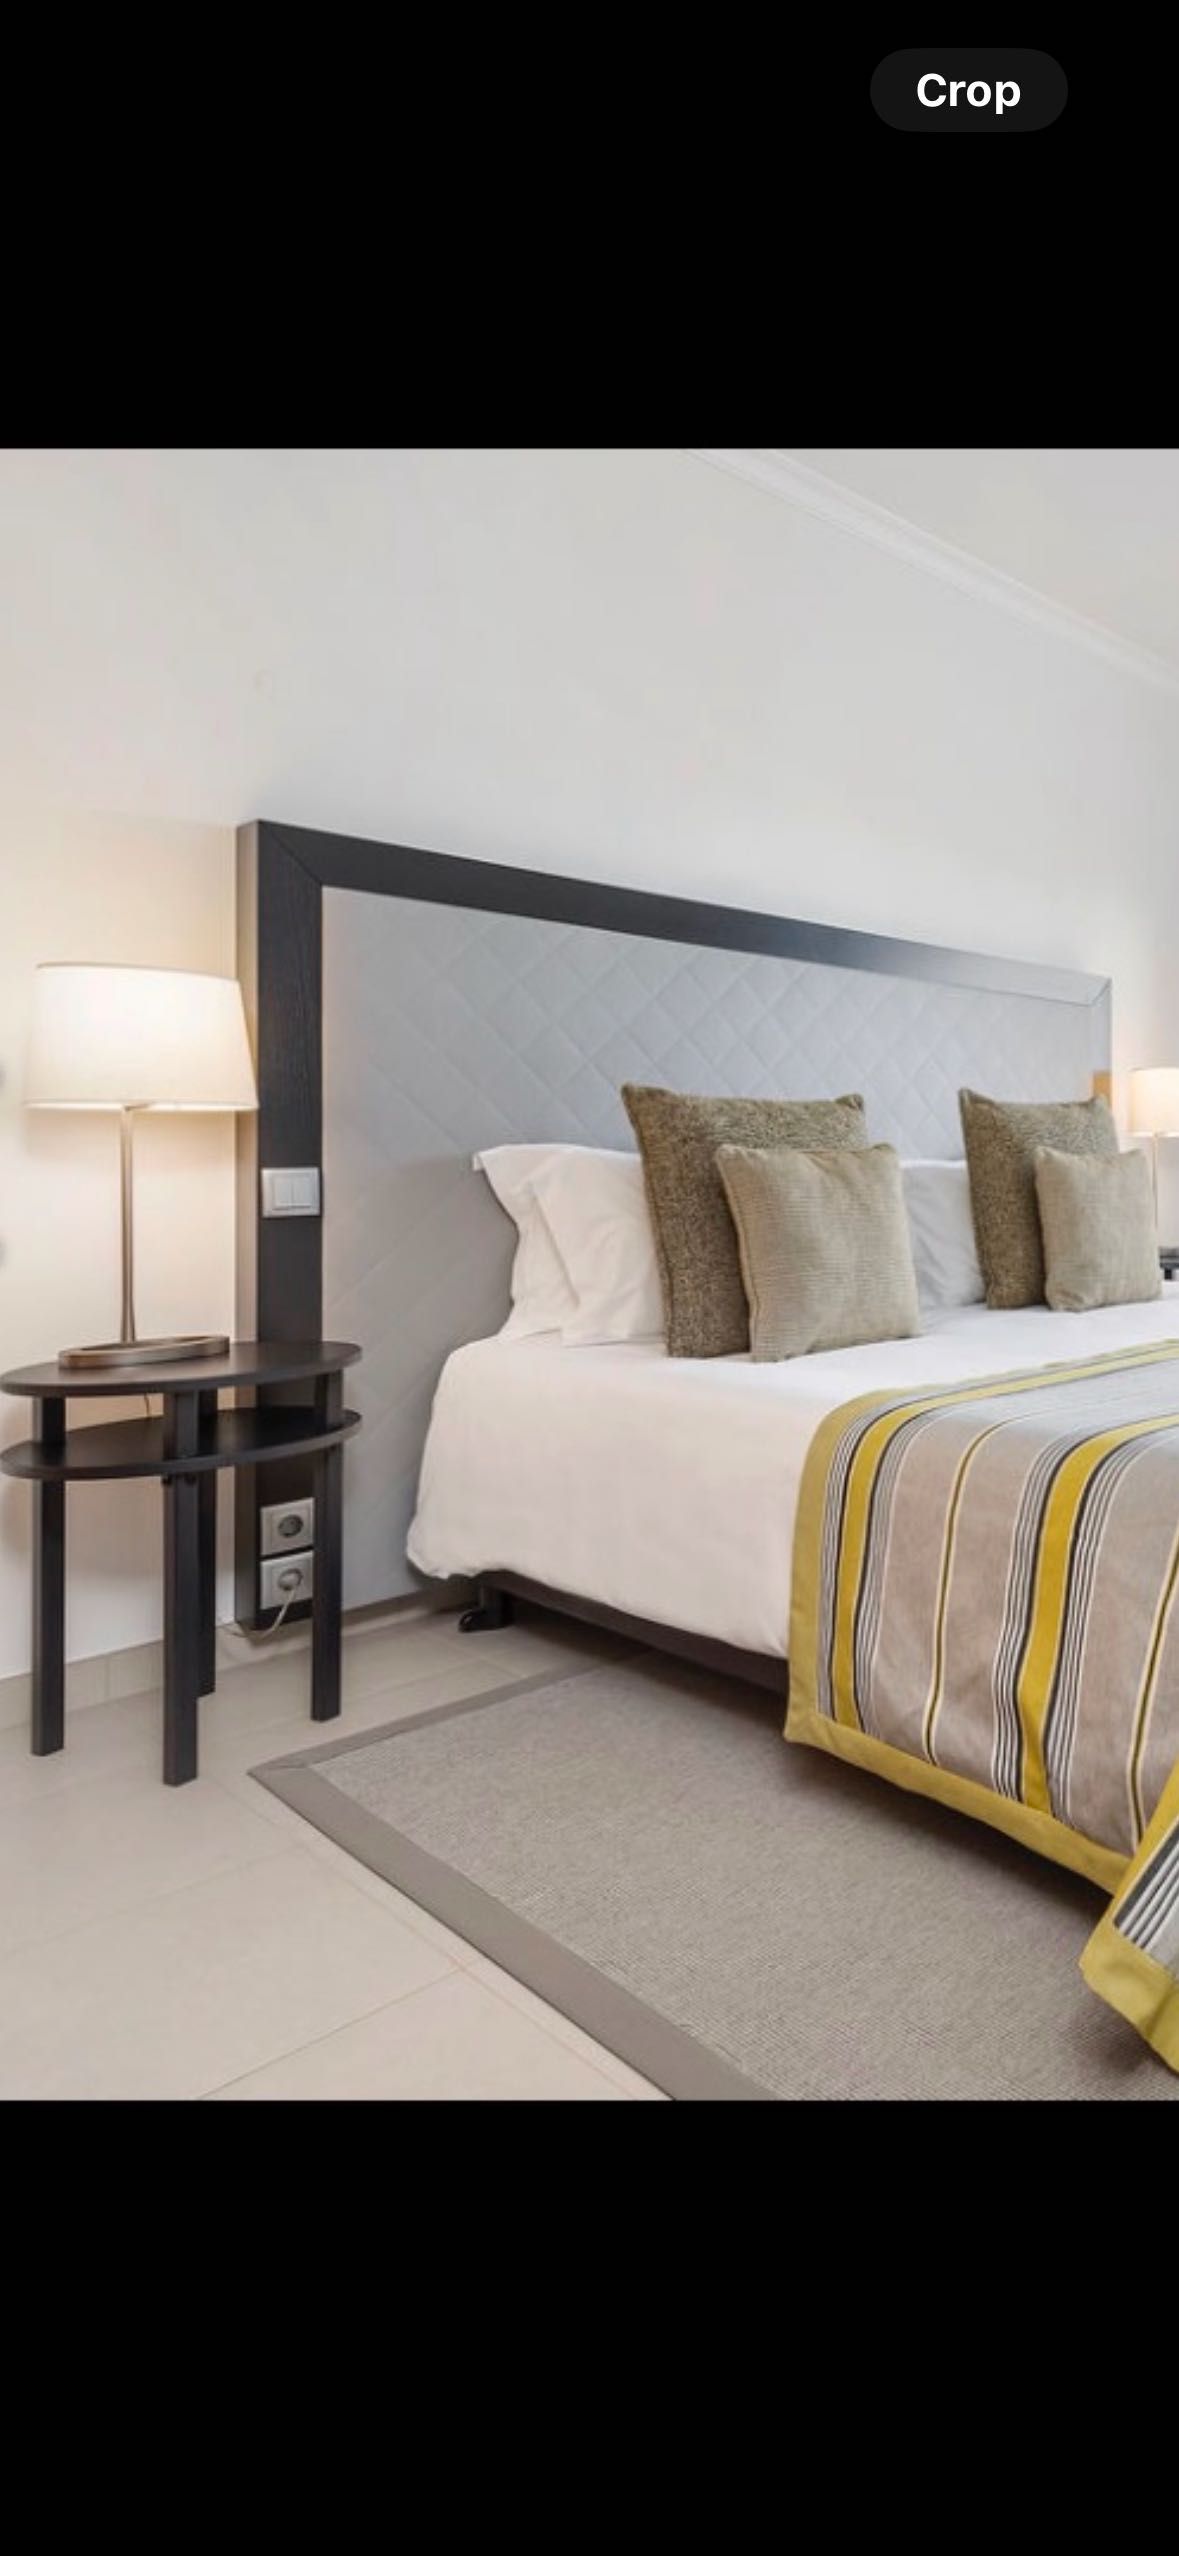 King bed 180x200 hotel standard split into 2x(90x200 single beds)